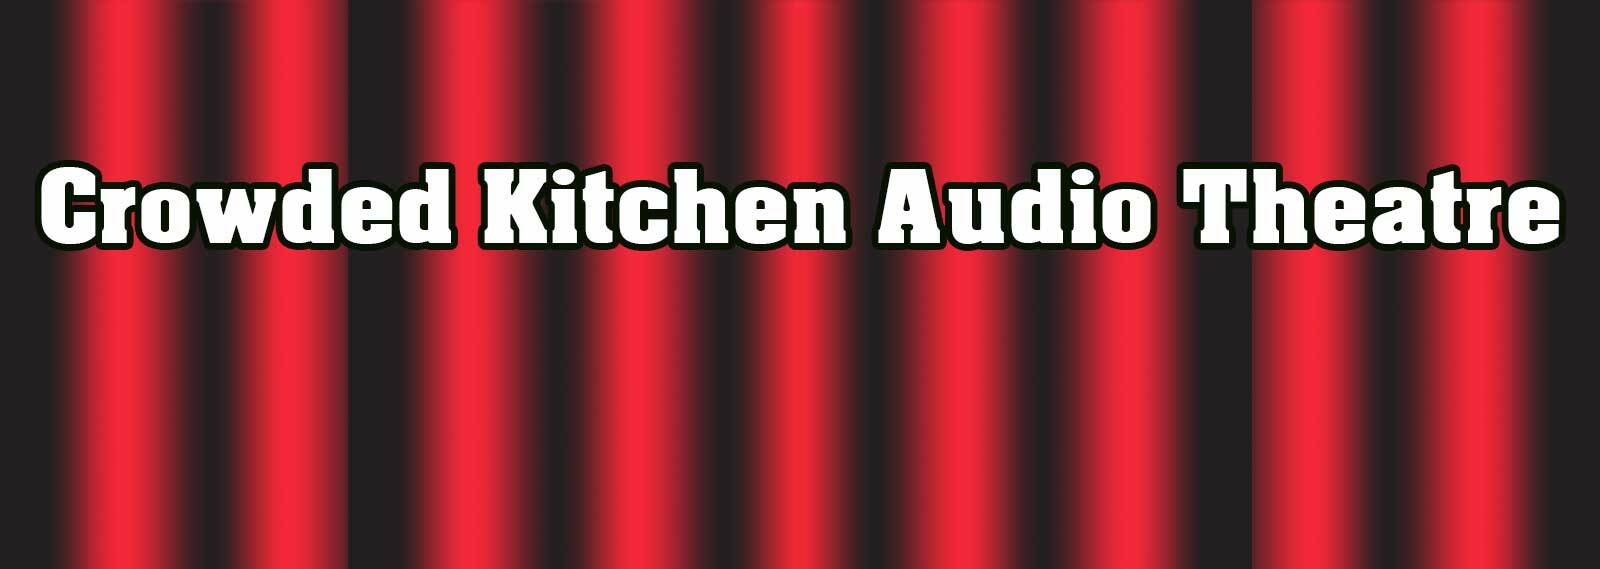 Crowded Kitchen Audio Theatre